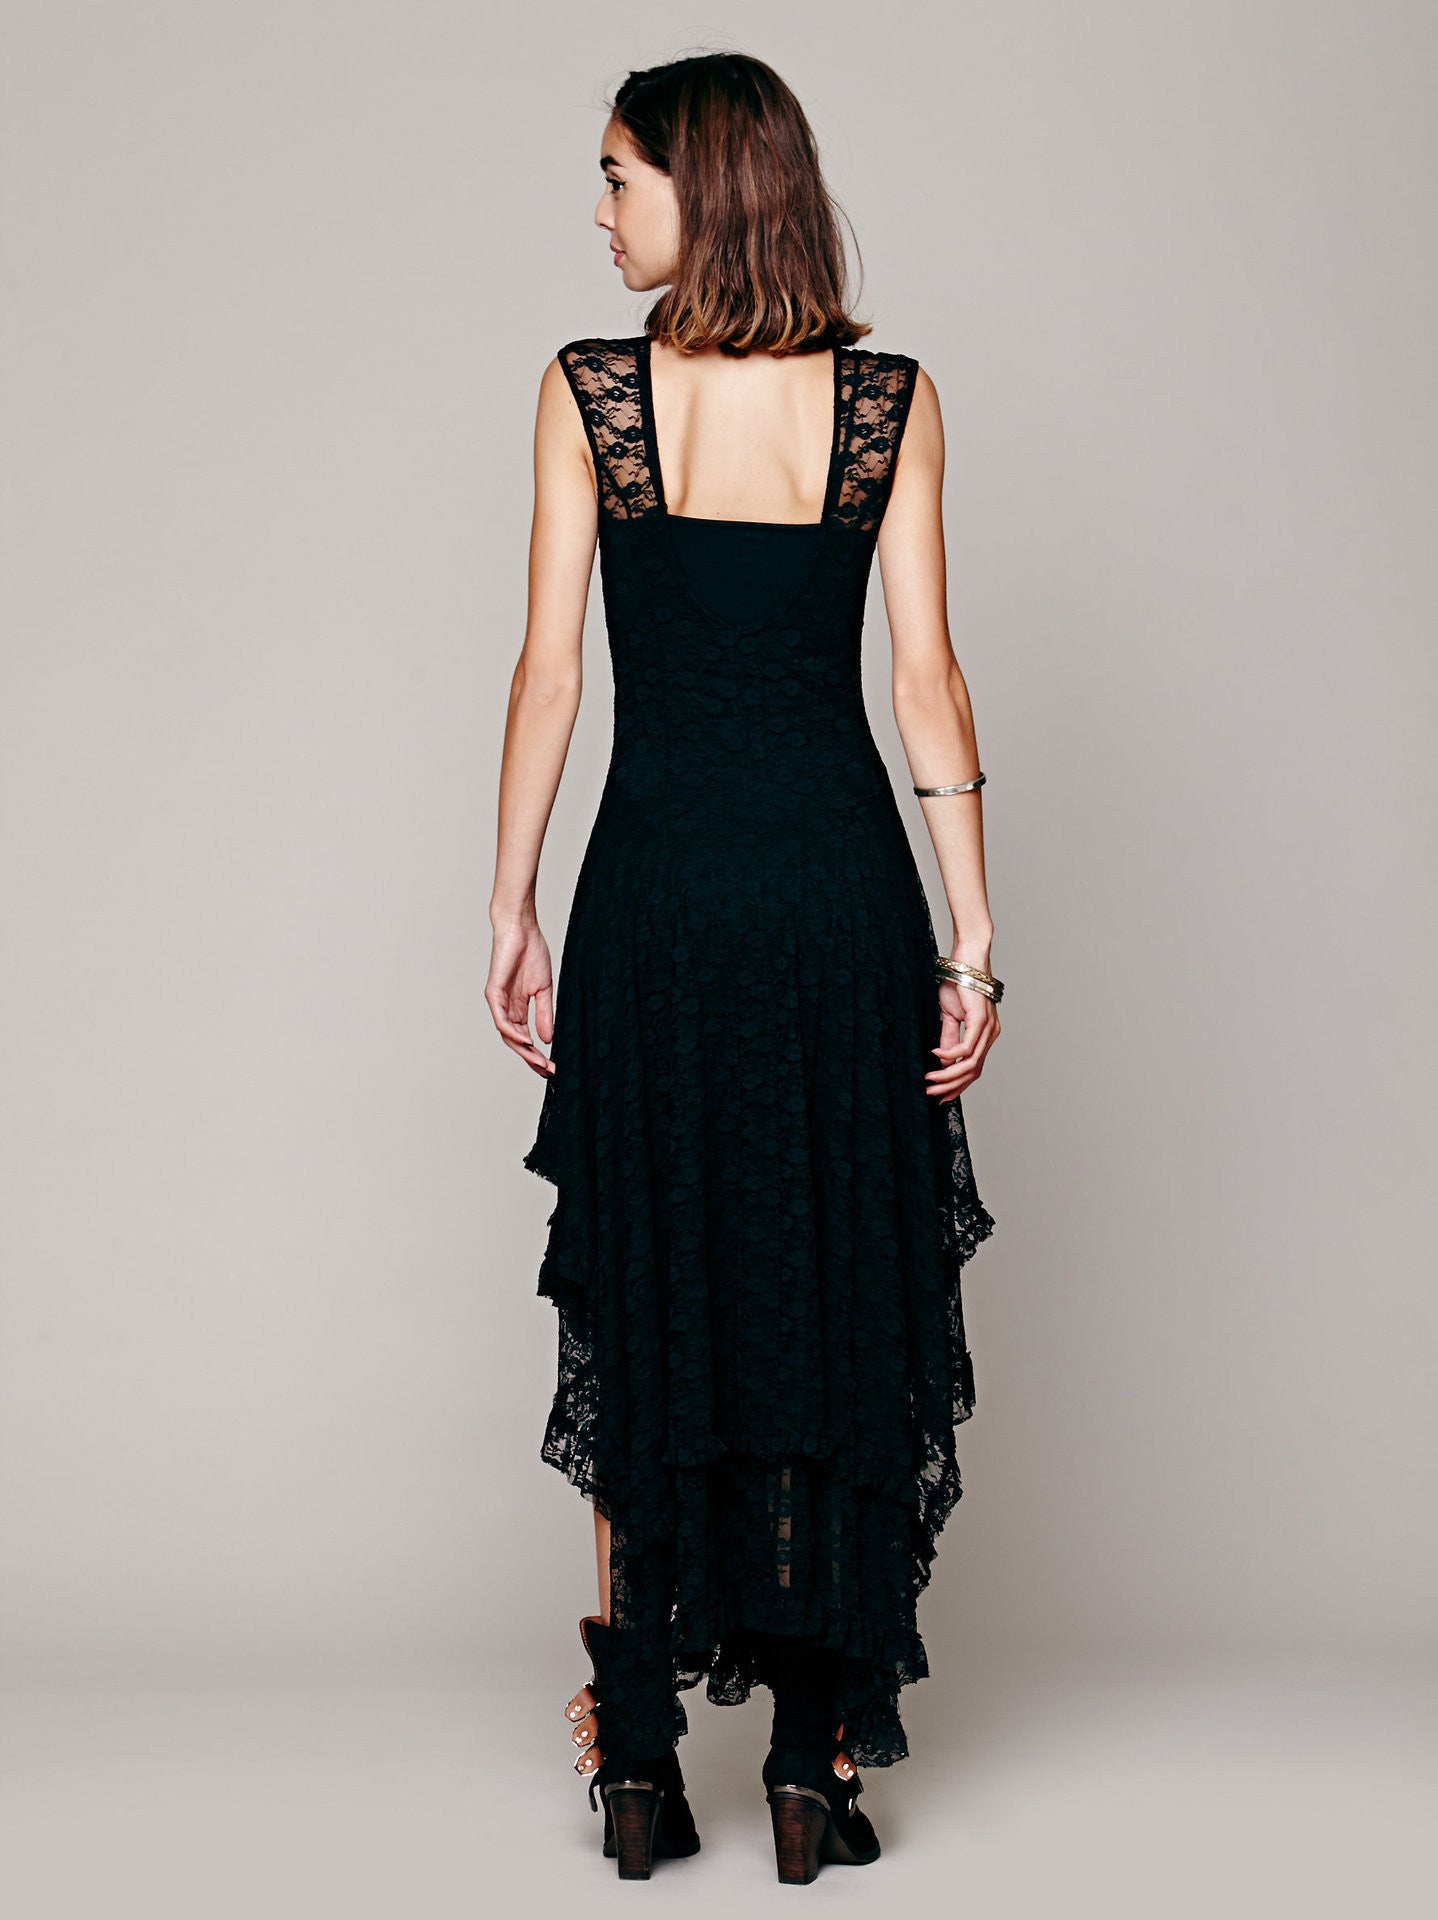 Summer Luxury Brand Runway Women Black Lace Dress Floral Daisy Embroidery Midi Mid-Calf Dresses Italian